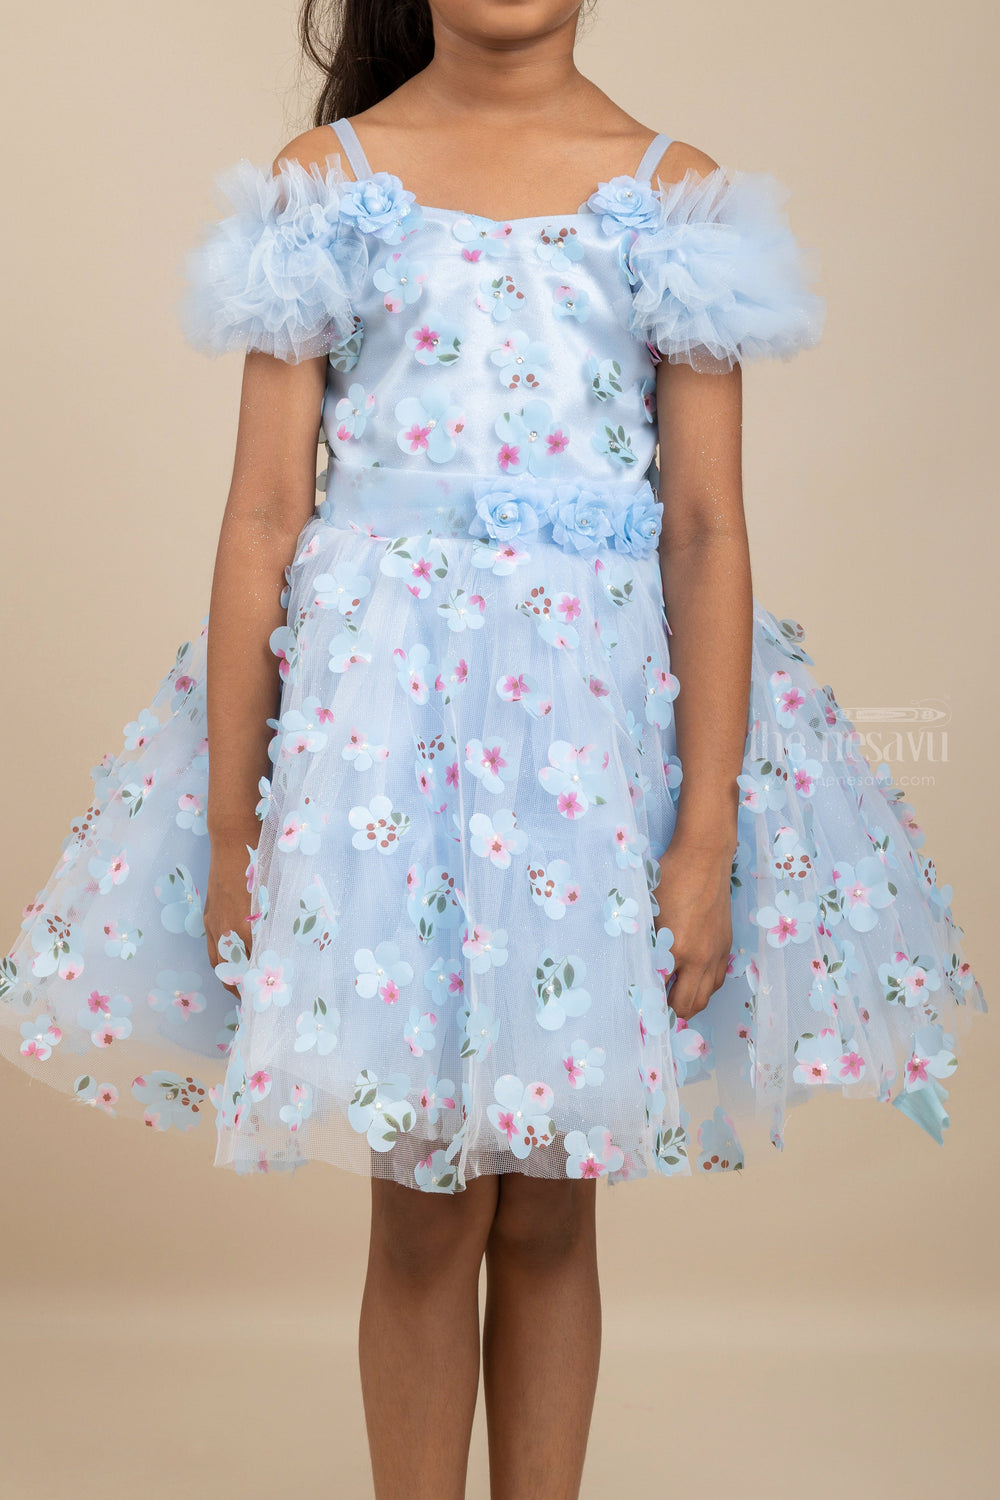 The Nesavu Party Frock Steel Blue Floral Designer Tutu Party Frock For Baby Girls psr silks Nesavu